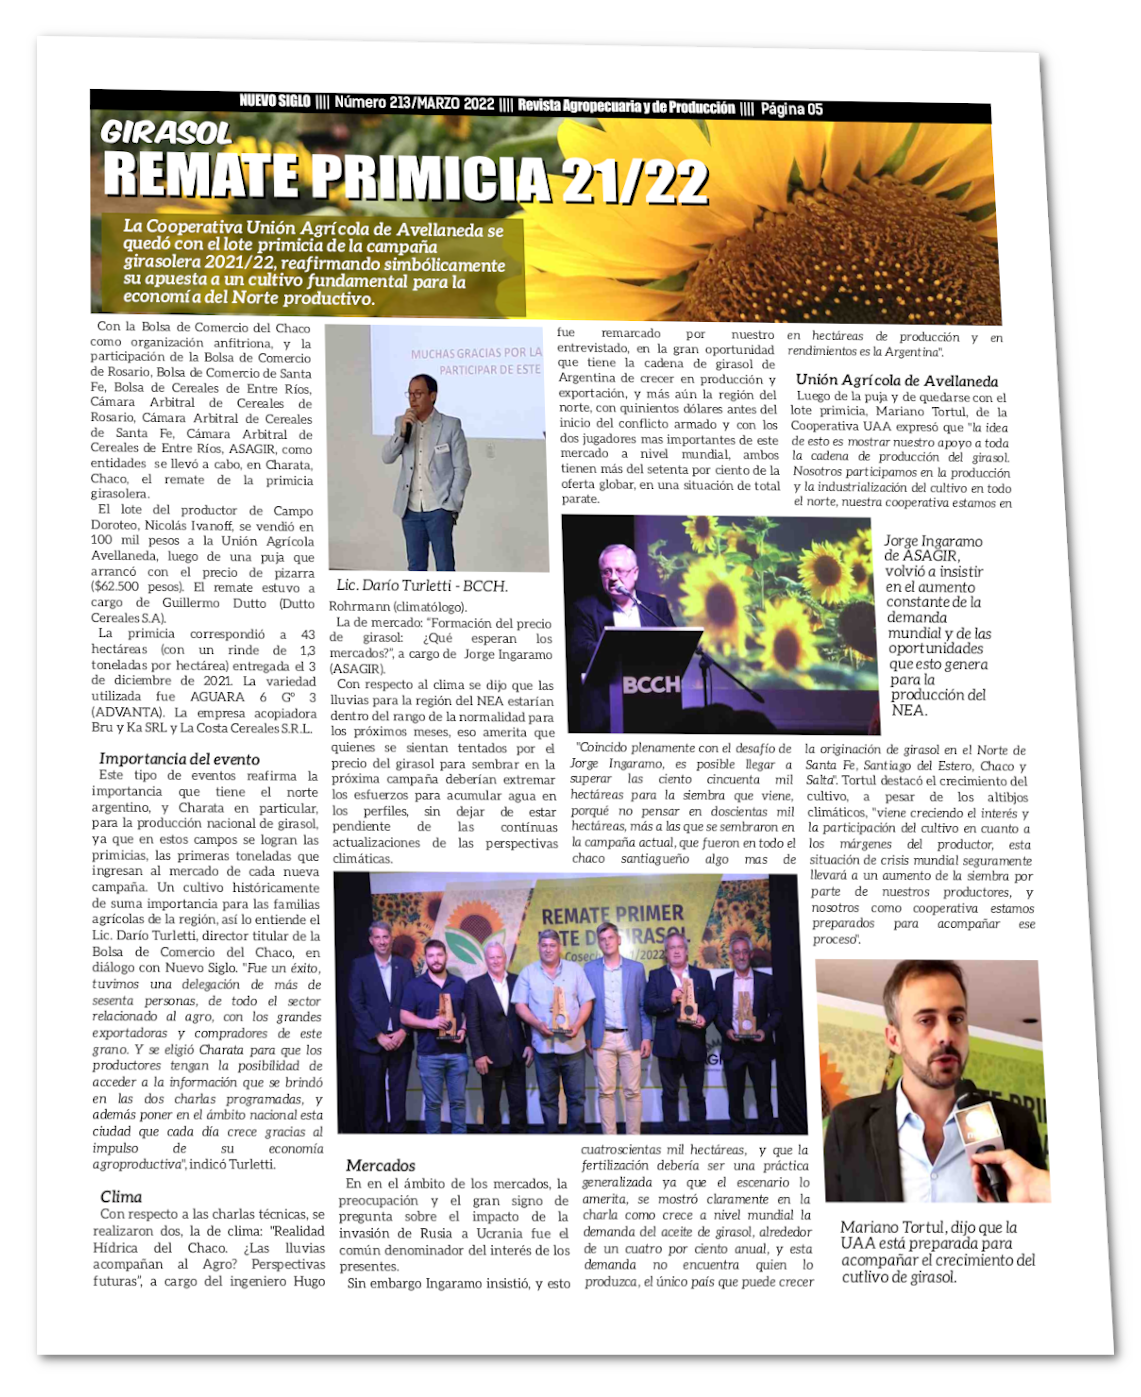 Página 05 de la Revista Agropecuaria Nuevo Siglo, Marzo 2022, remate del lote primicia de girasol.